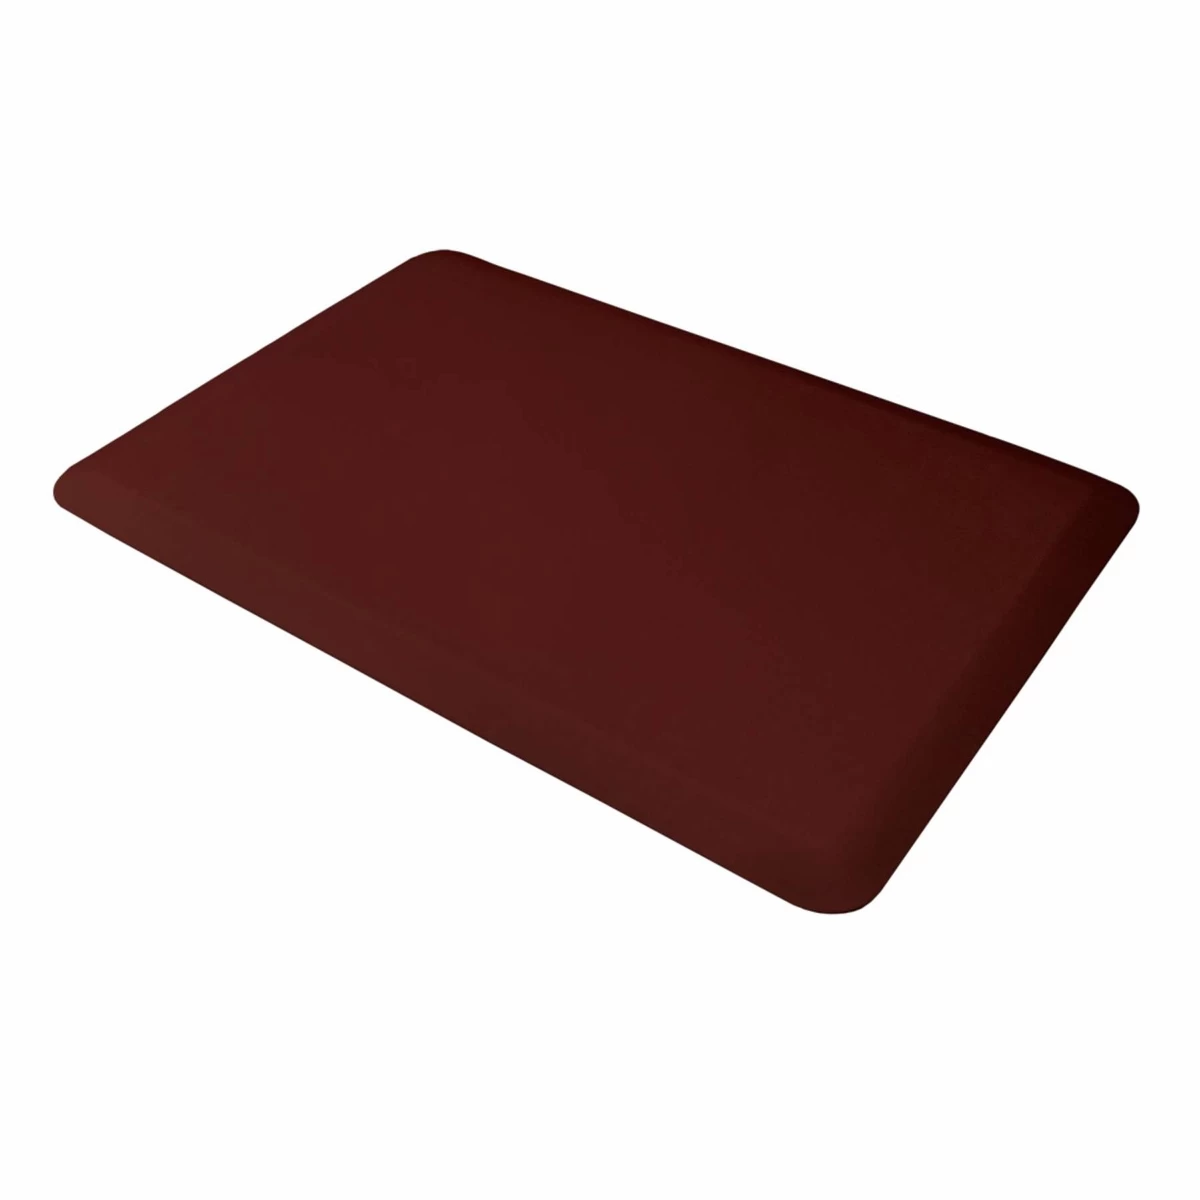 Comfortable OEM china manufacturer personalized floor mats protective floor mats decorative kitchen floor mats